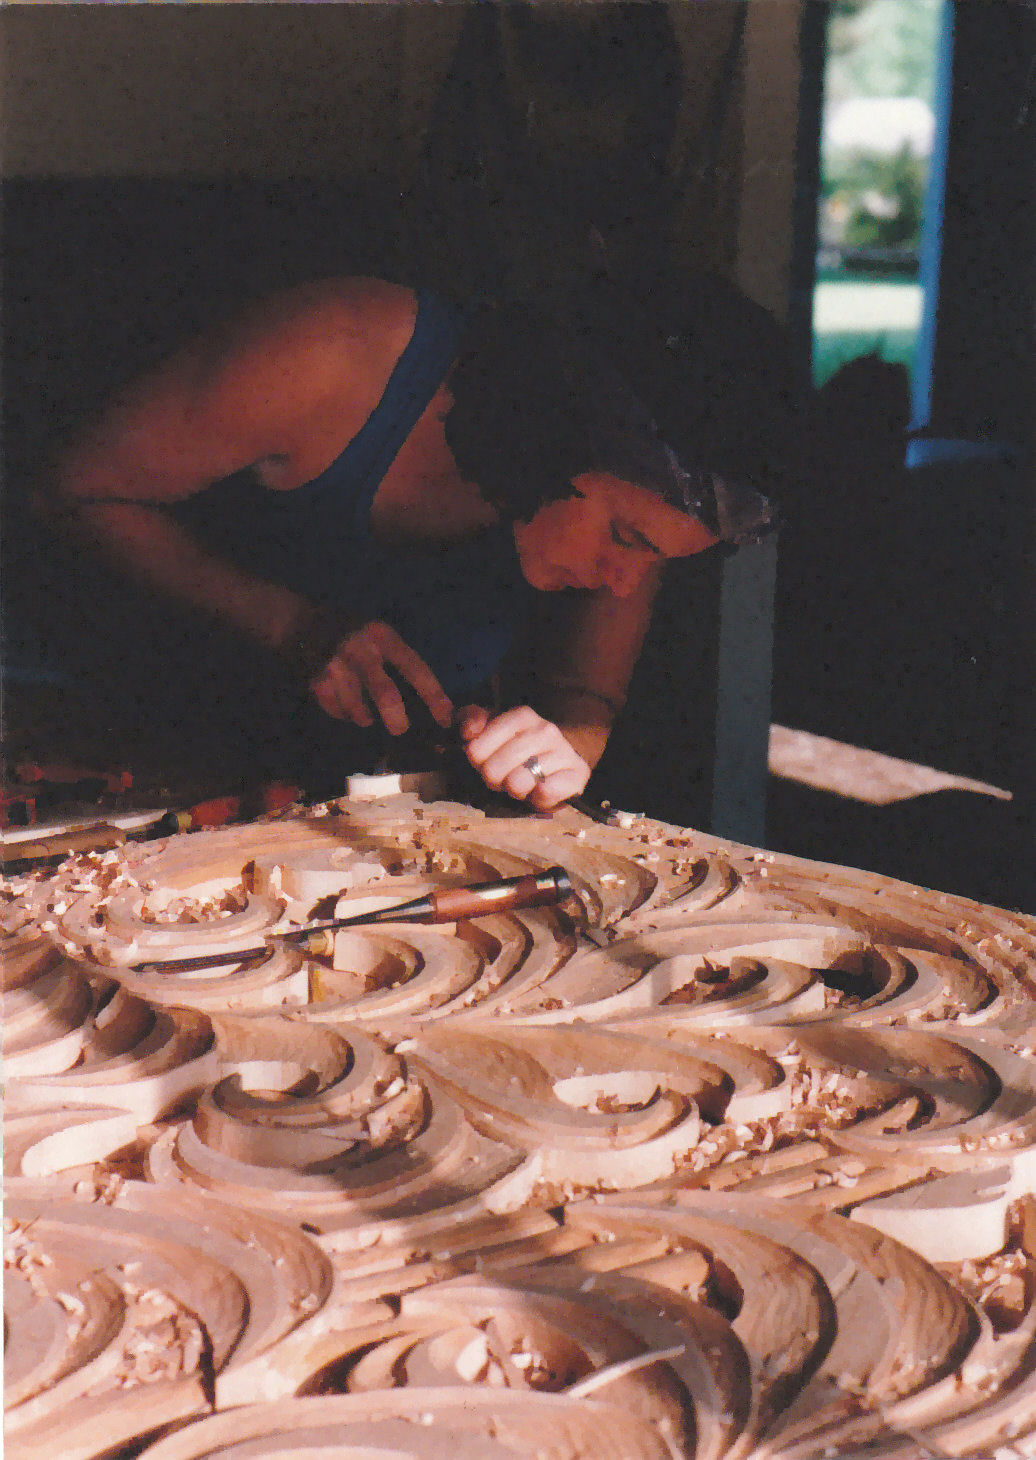 Tree Sculpture, carving in workshop